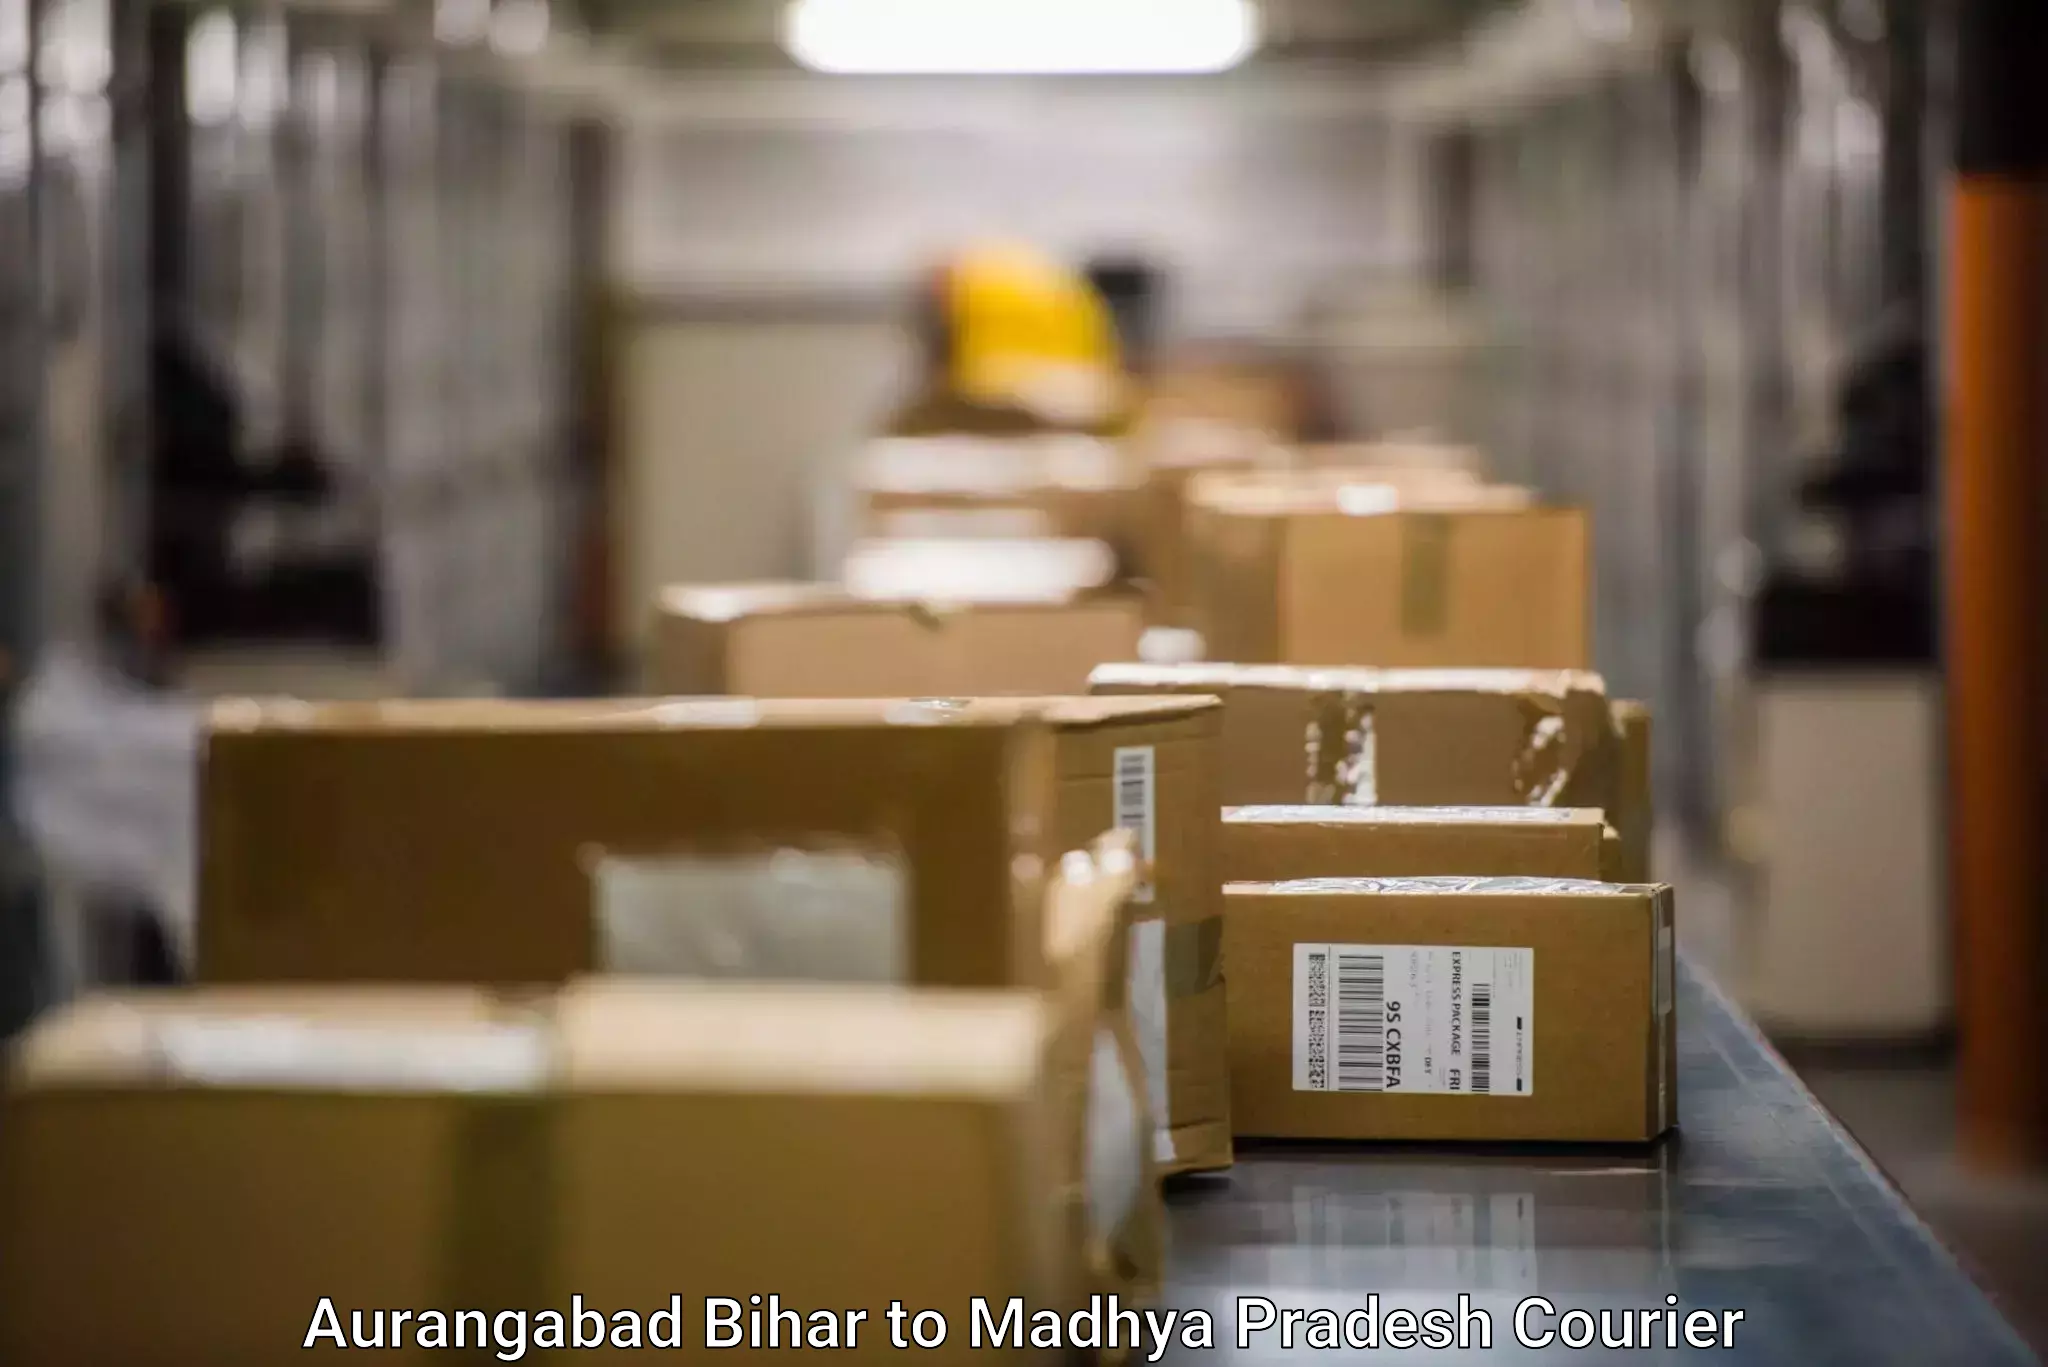 High-priority parcel service Aurangabad Bihar to Madhya Pradesh